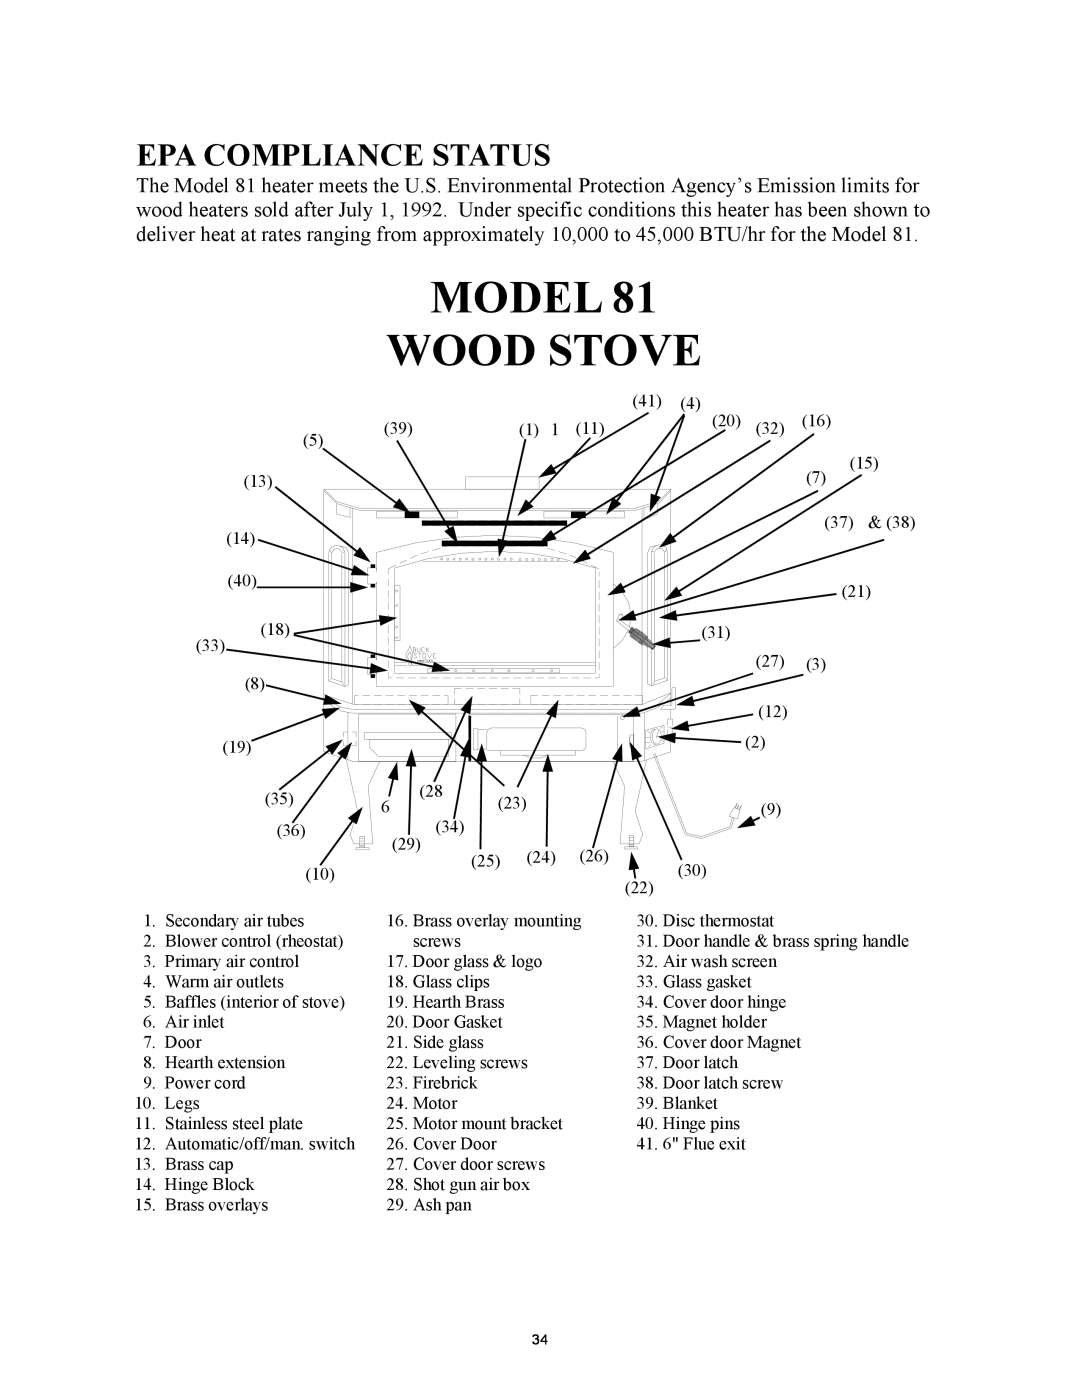 New Buck Corporation 81 installation instructions Epa Compliance Status, Model Wood Stove 